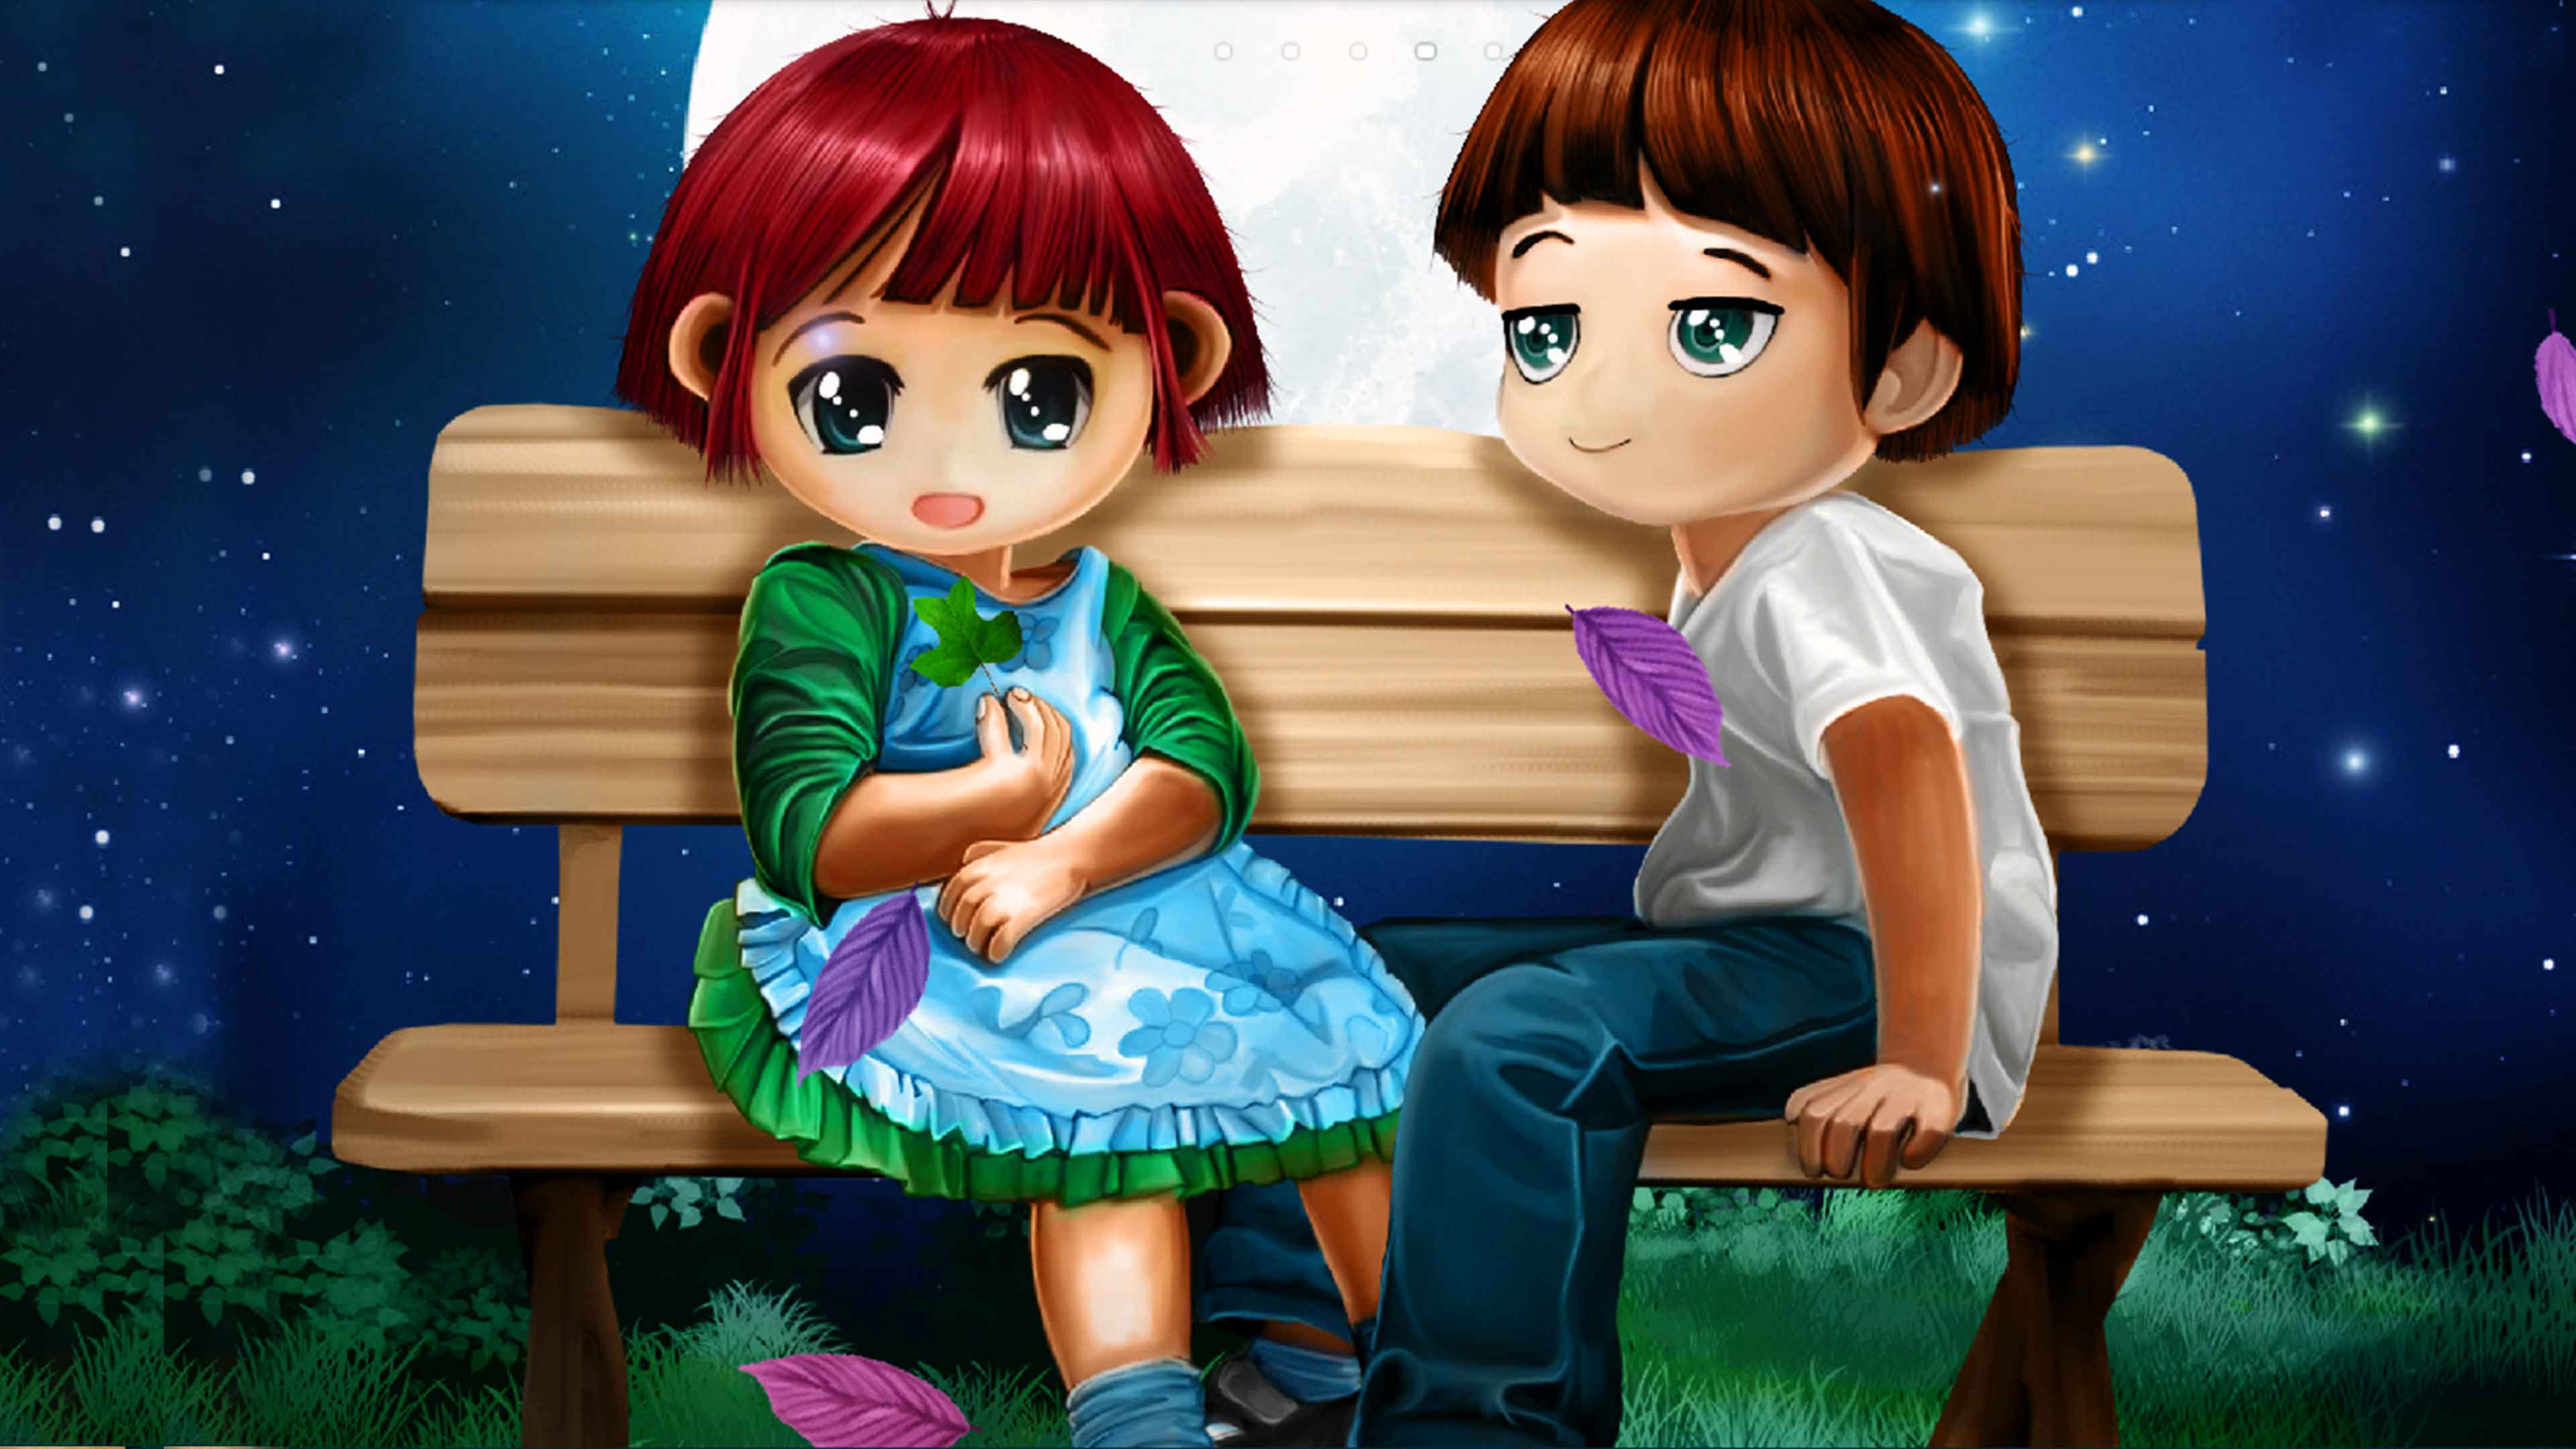 Love Couple Cartoon Wallpaper Hd 1080p Free Download